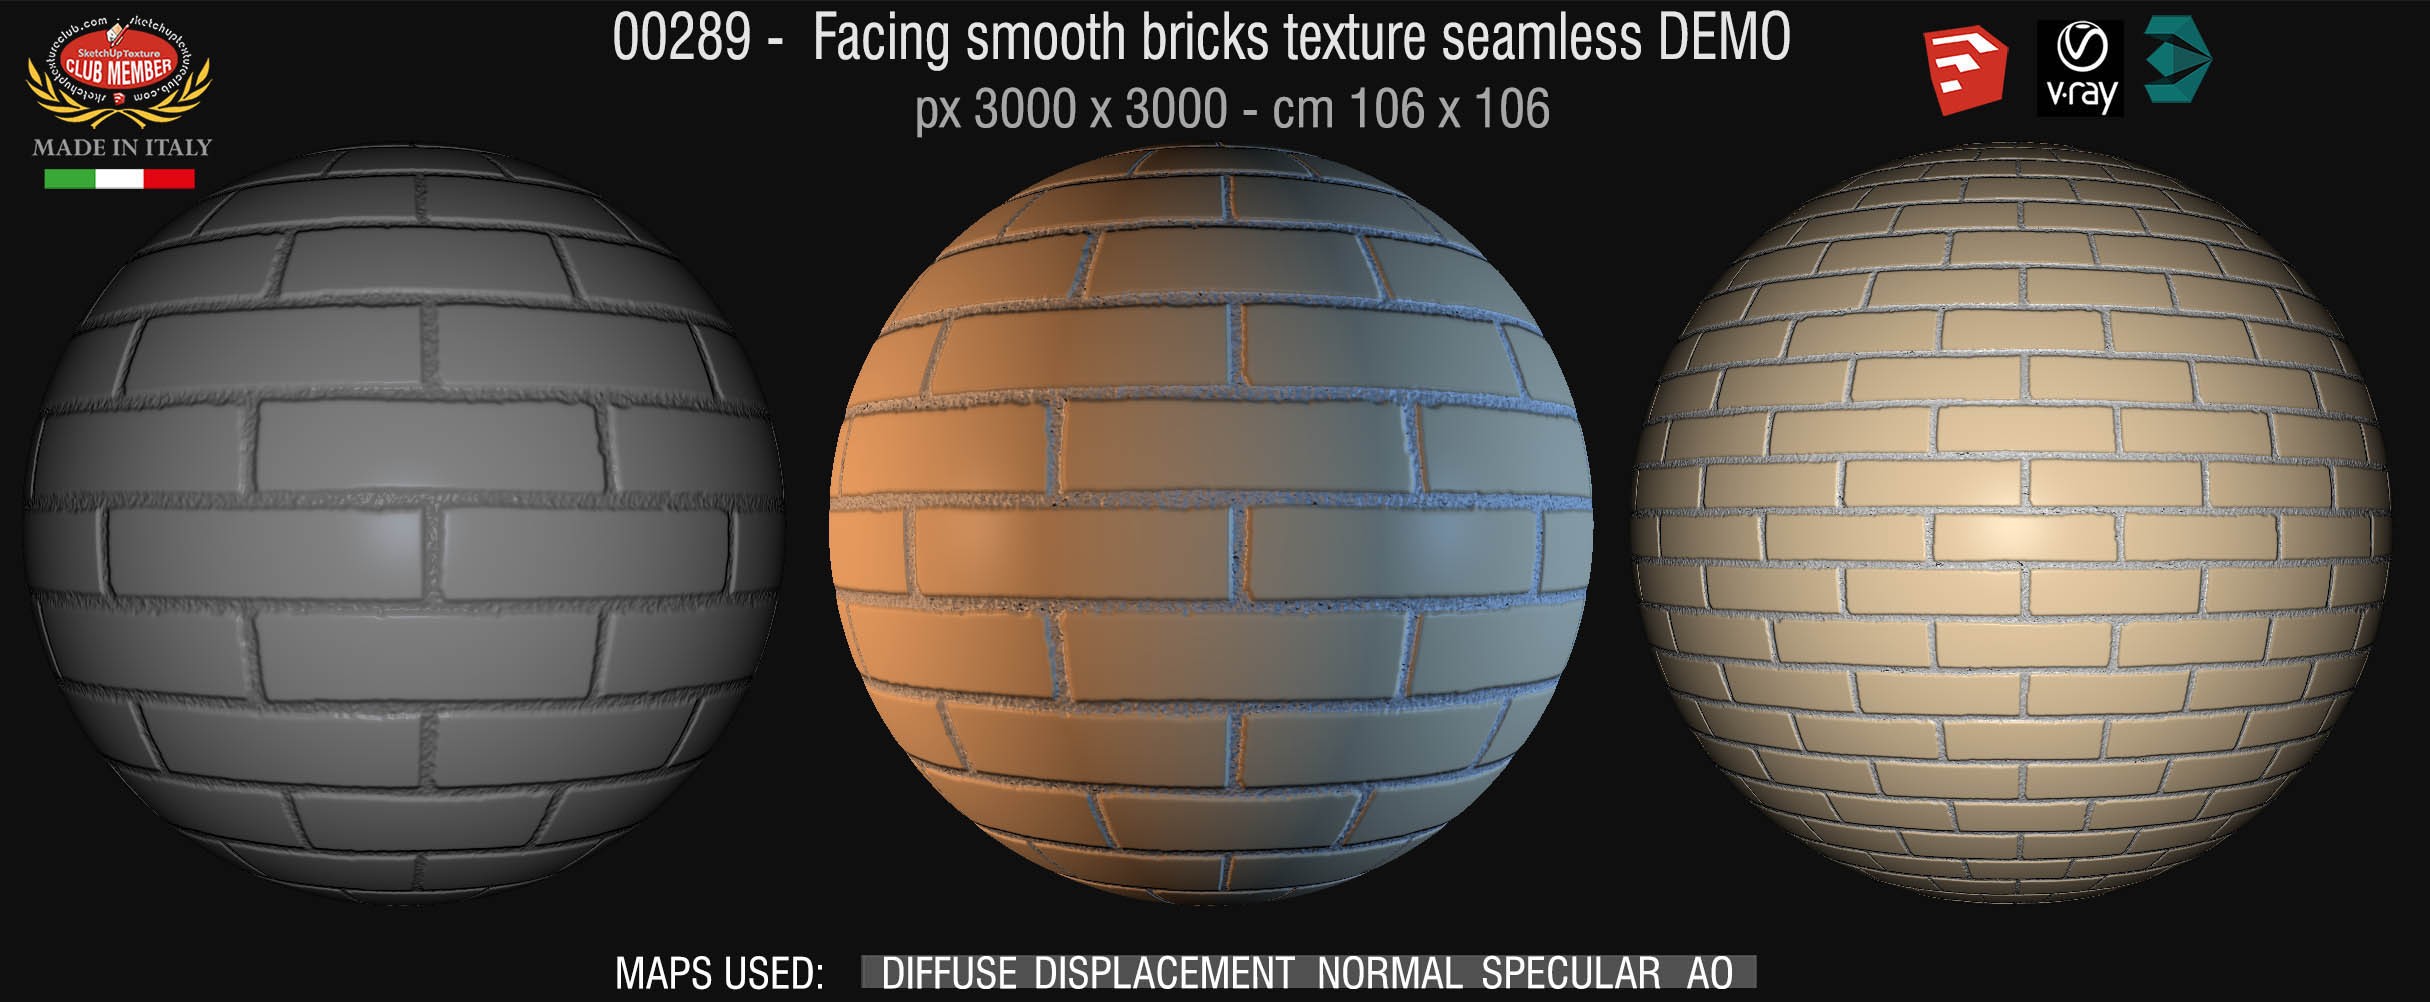 00289 Facing smooth bricks texture seamless + maps DEMO